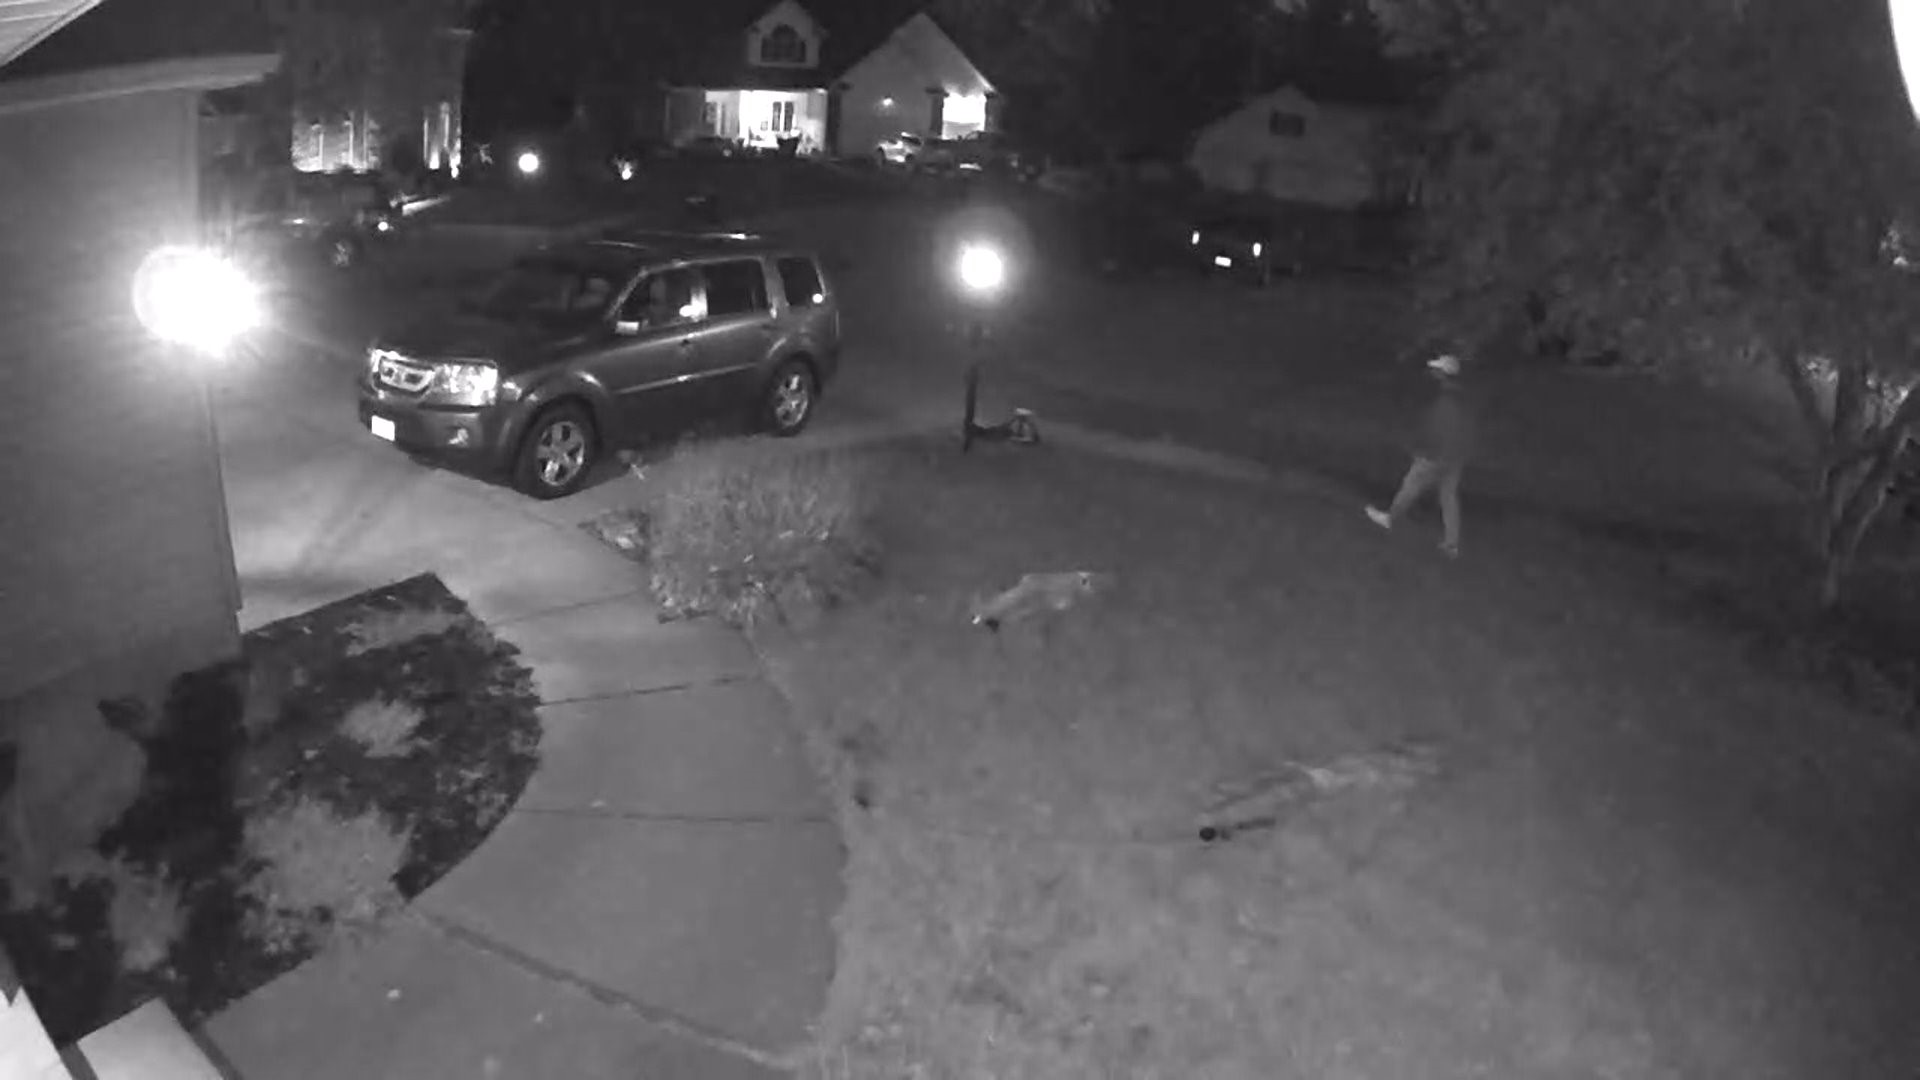 Neighbors voice concerns after burglary spree